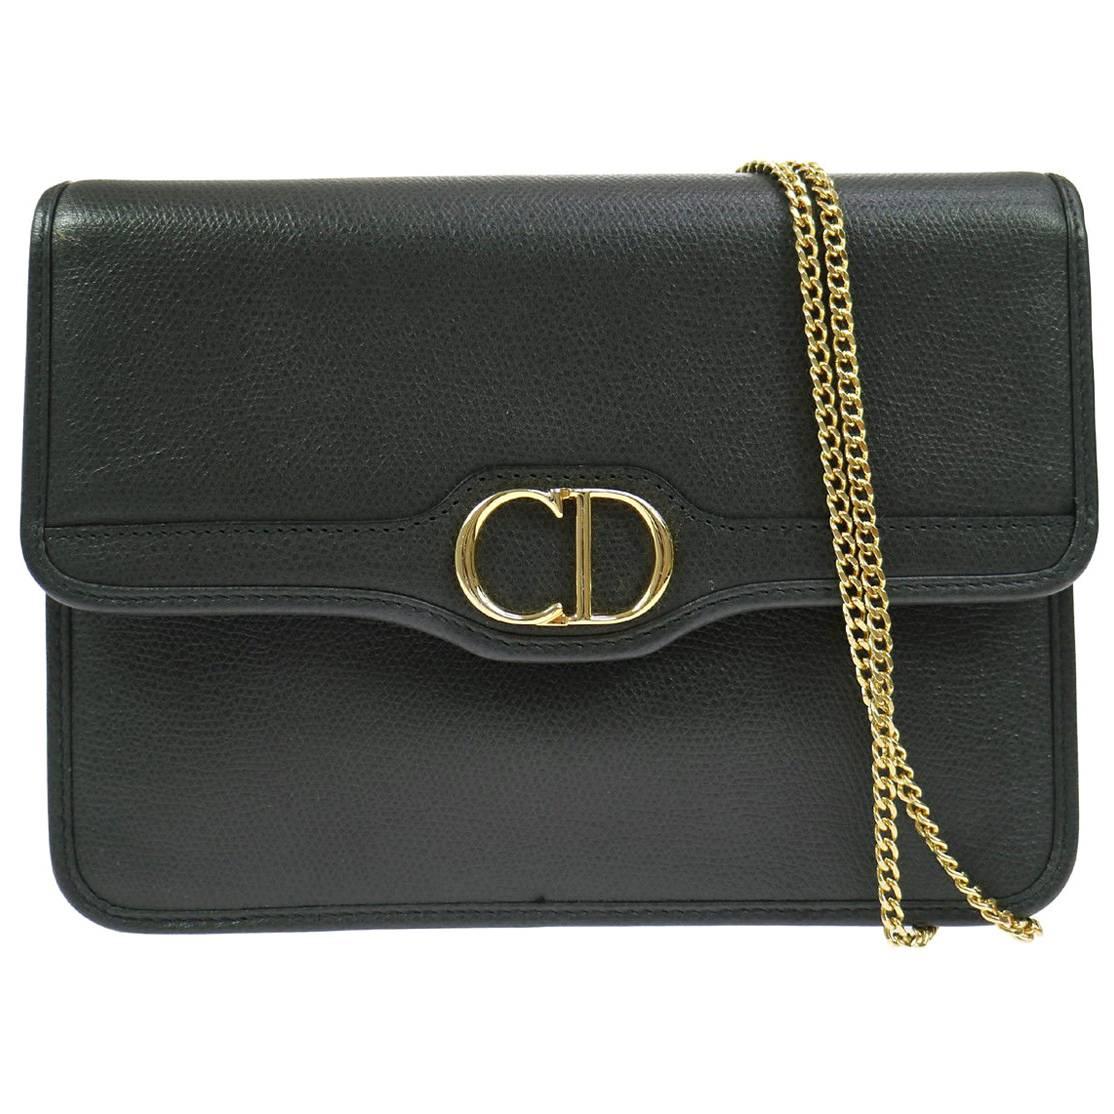 Christian Dior 'CD" Charm Gold Leather 2 in 1 Clutch Shoulder Flap Bag